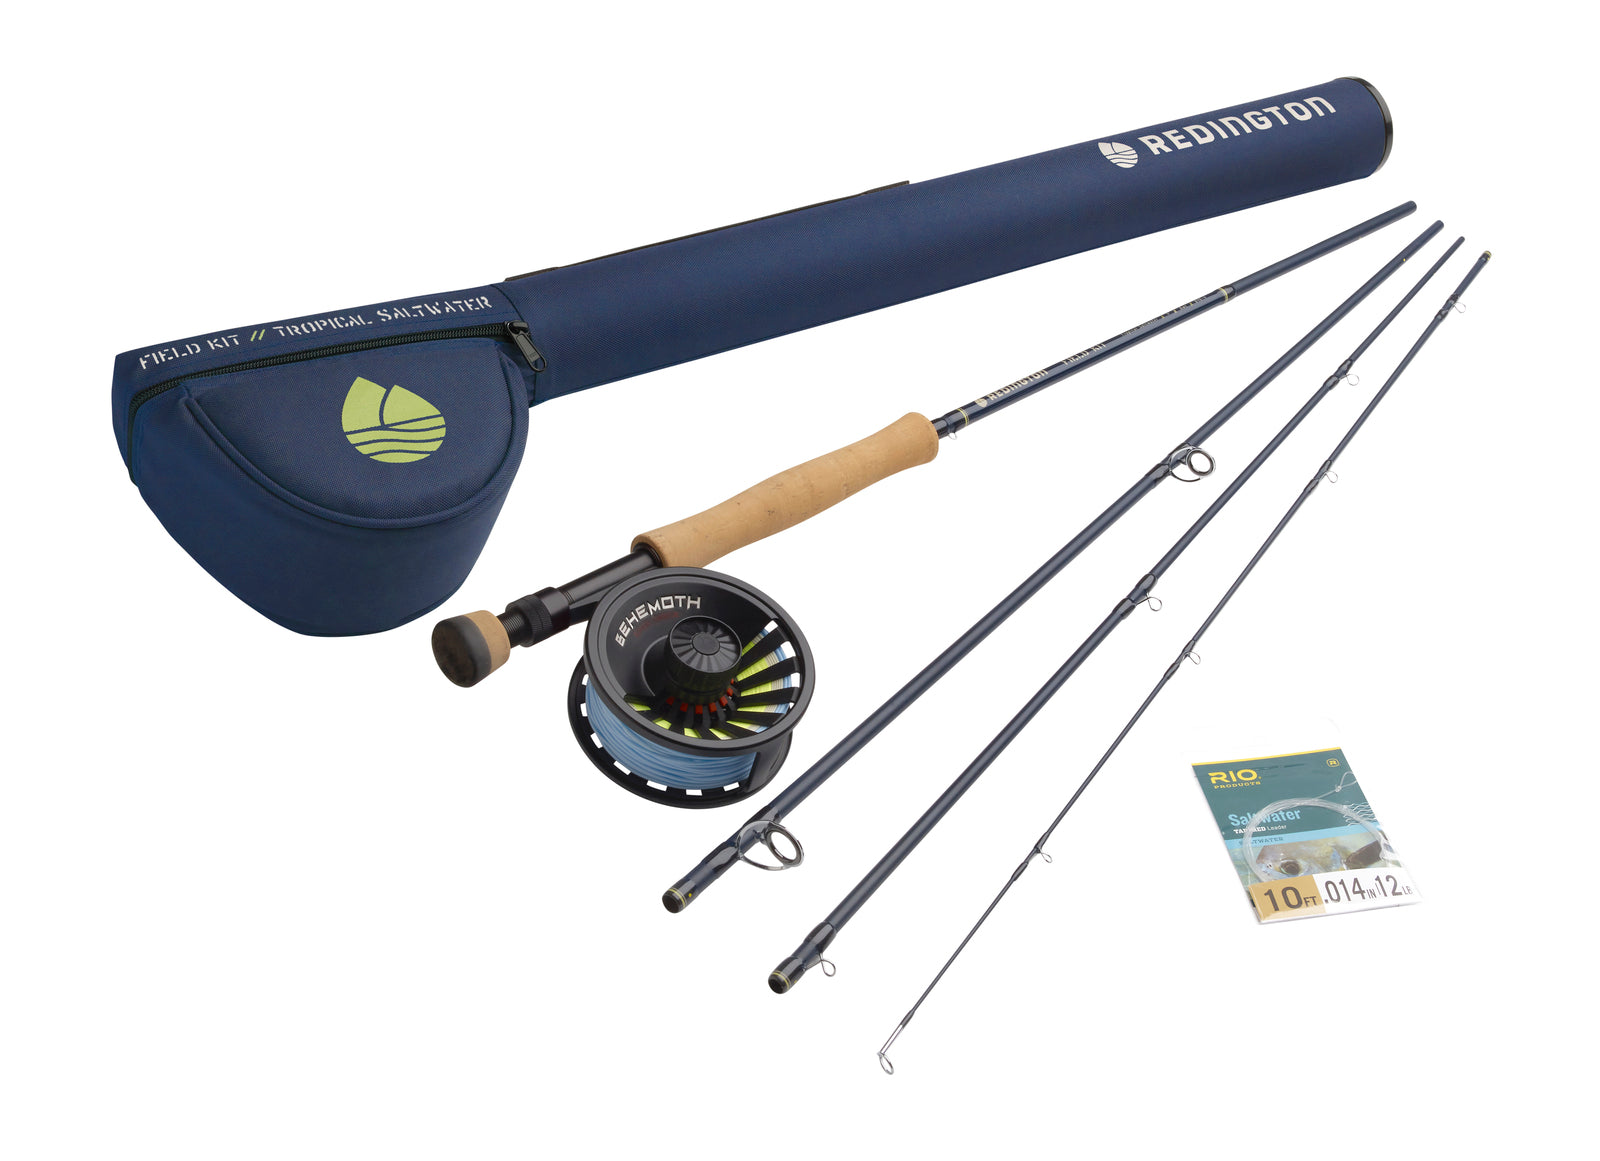  Fly Fishing Equipment - ReelFlyRod / Fly Fishing Equipment /  Fishing Equipment: Sports & Outdoors